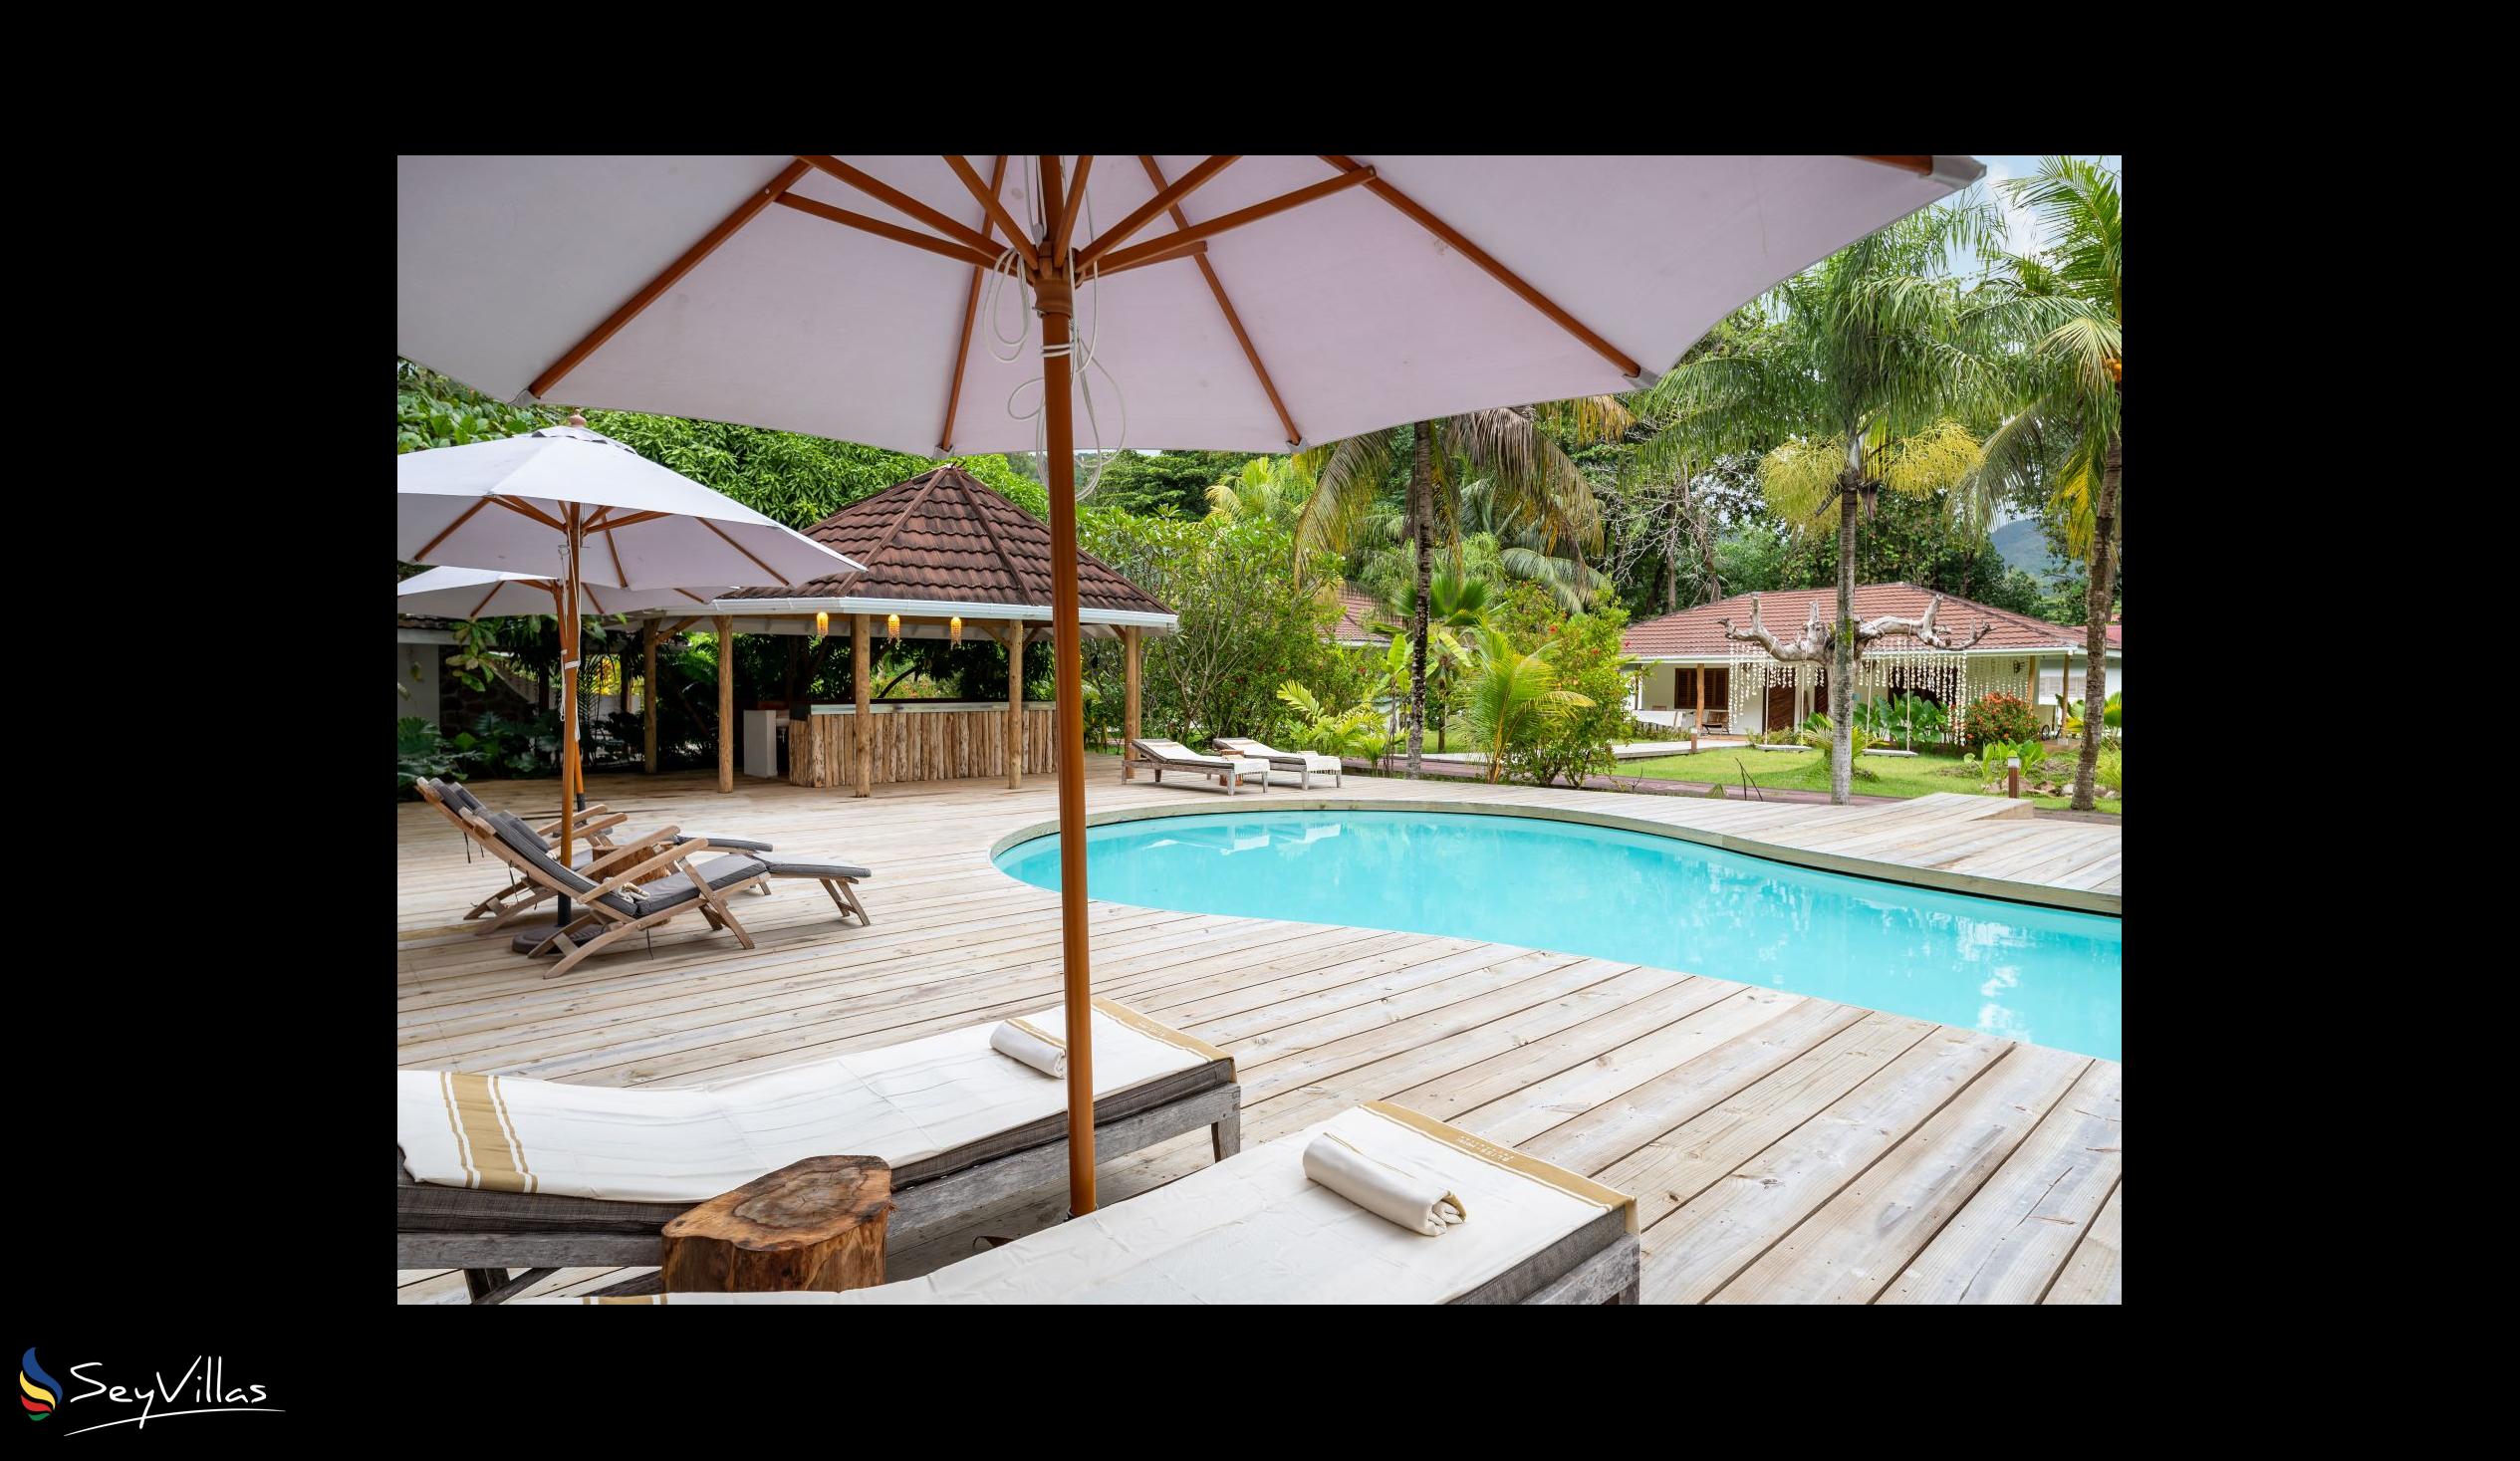 Photo 6: Bliss Hotel Praslin - Outdoor area - Praslin (Seychelles)